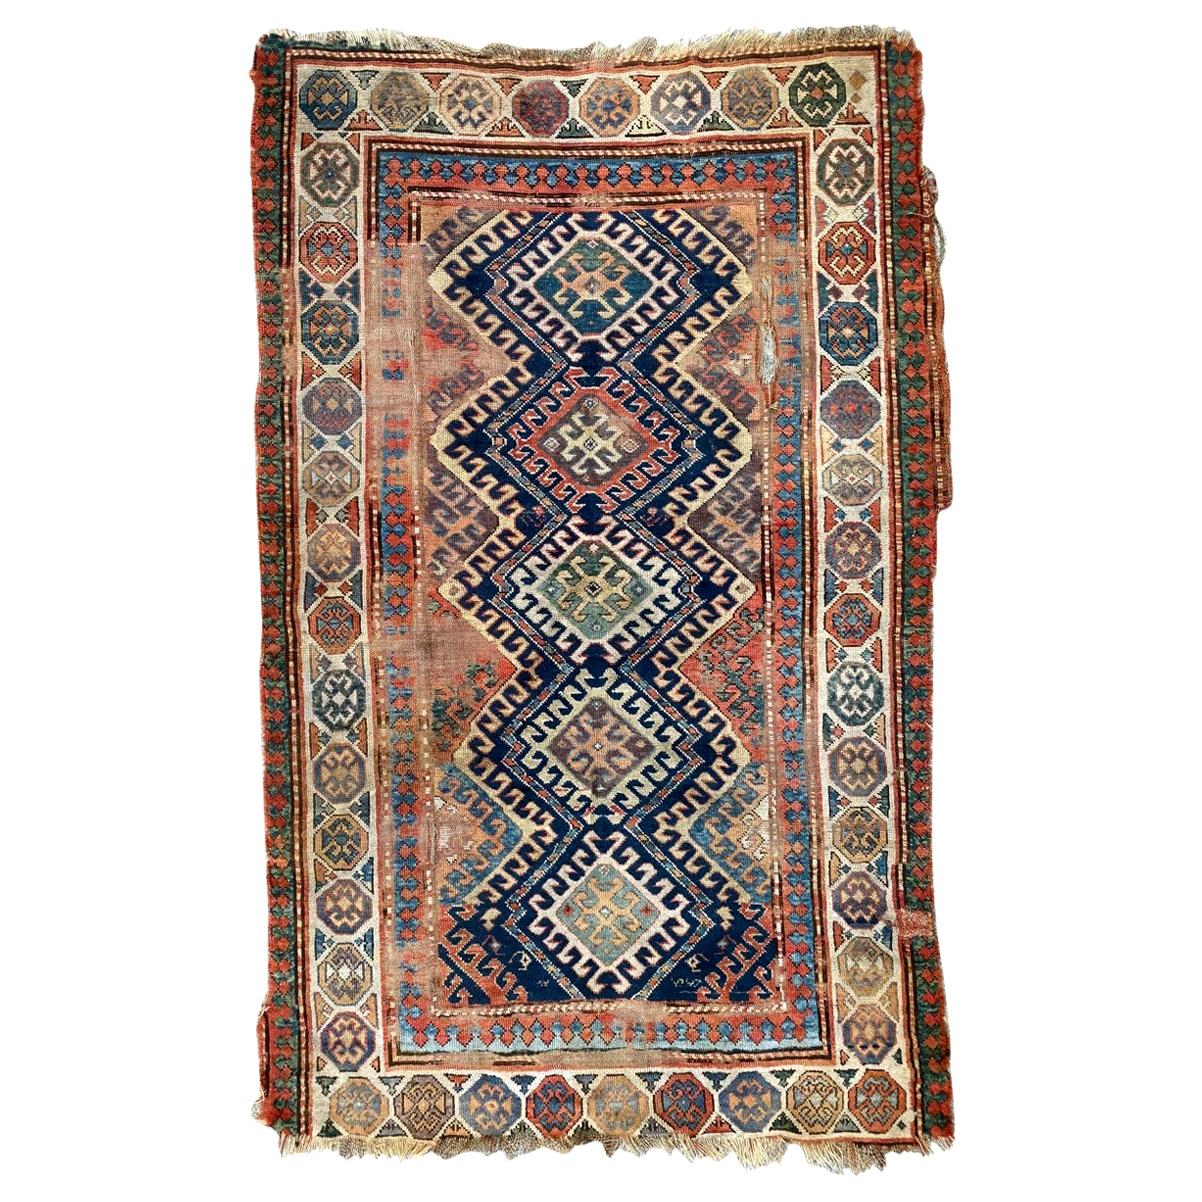 Bobyrug's Antique Distressed Caucasian Kazak Rug (tapis caucasien kazak)